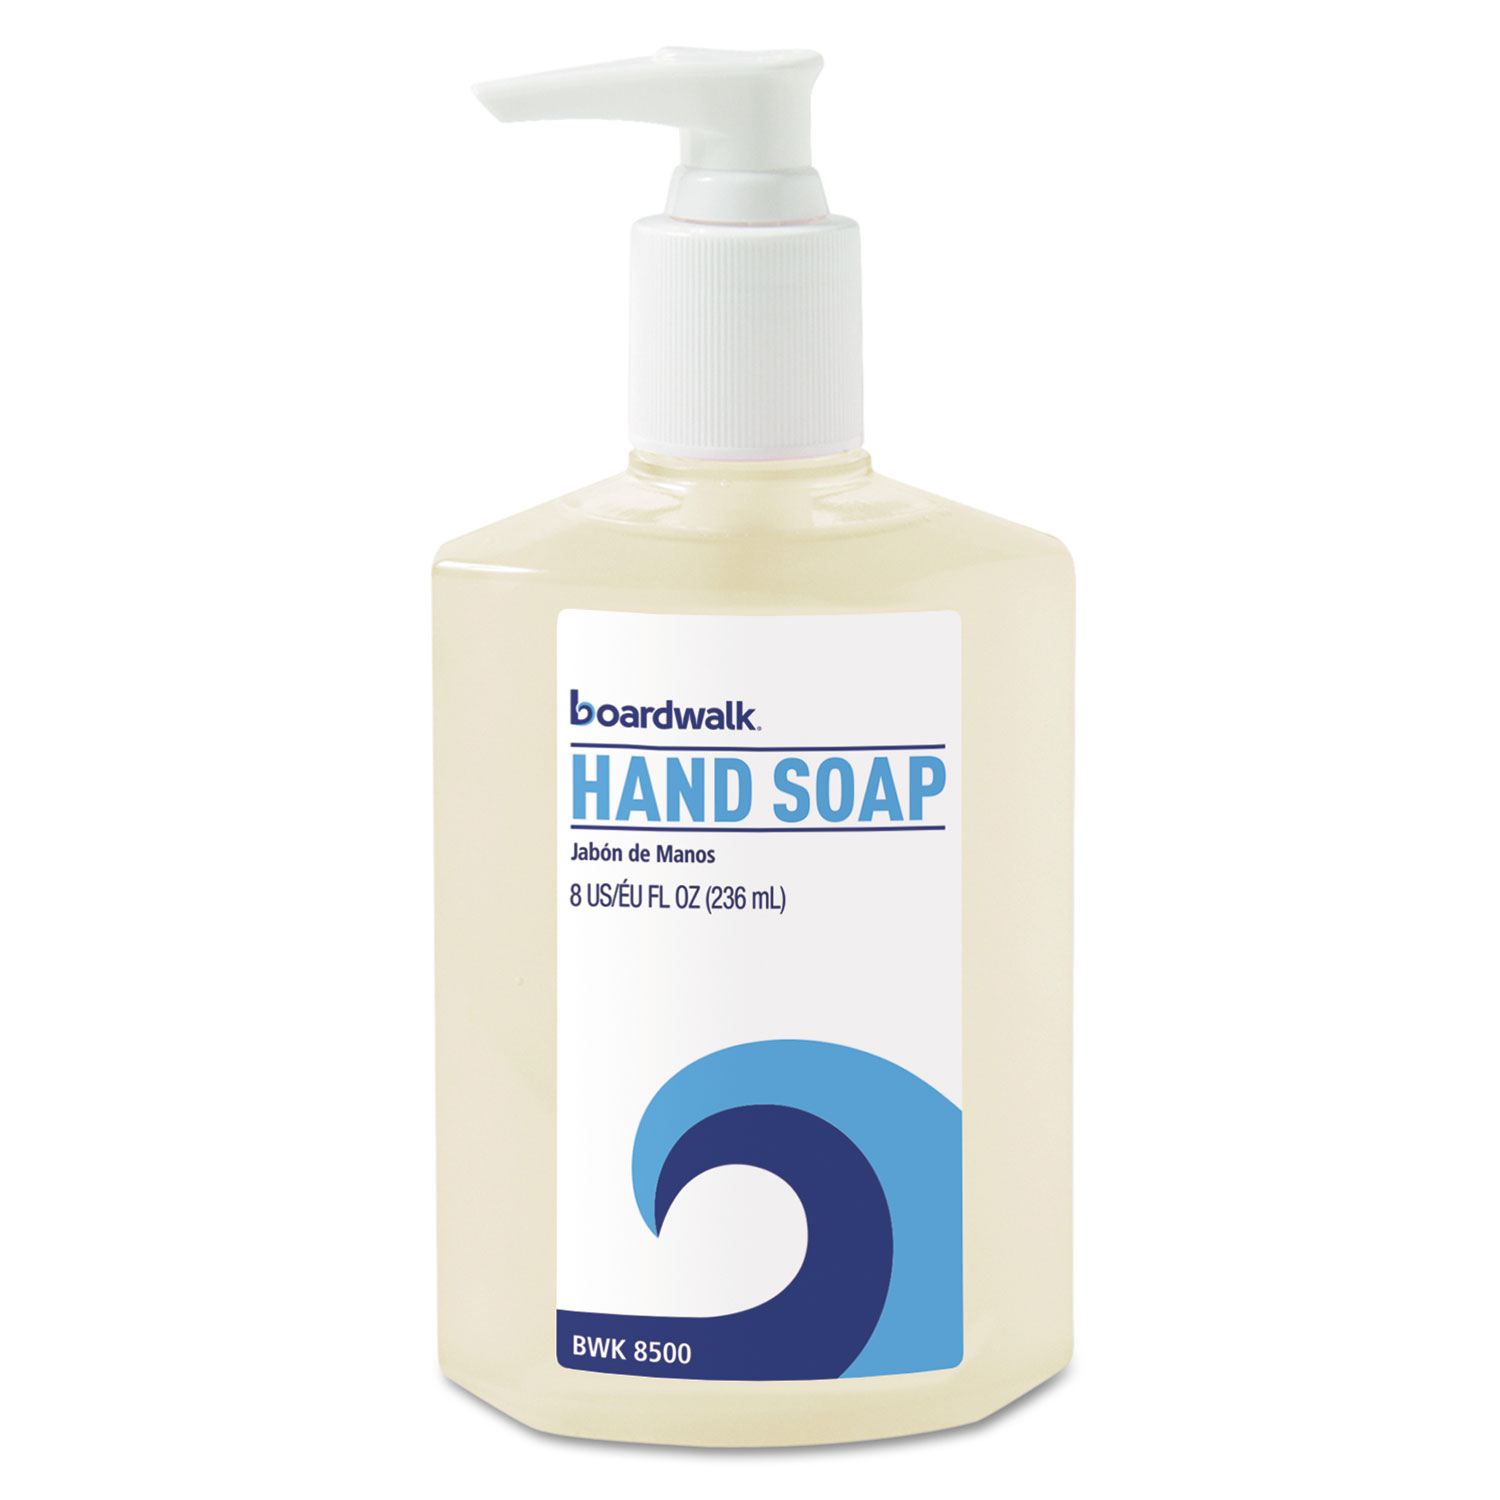  Boardwalk 9328-12-GCE00 Liquid Hand Soap, Floral, 8 oz Pump Bottle, 12/Carton (BWK8500) 